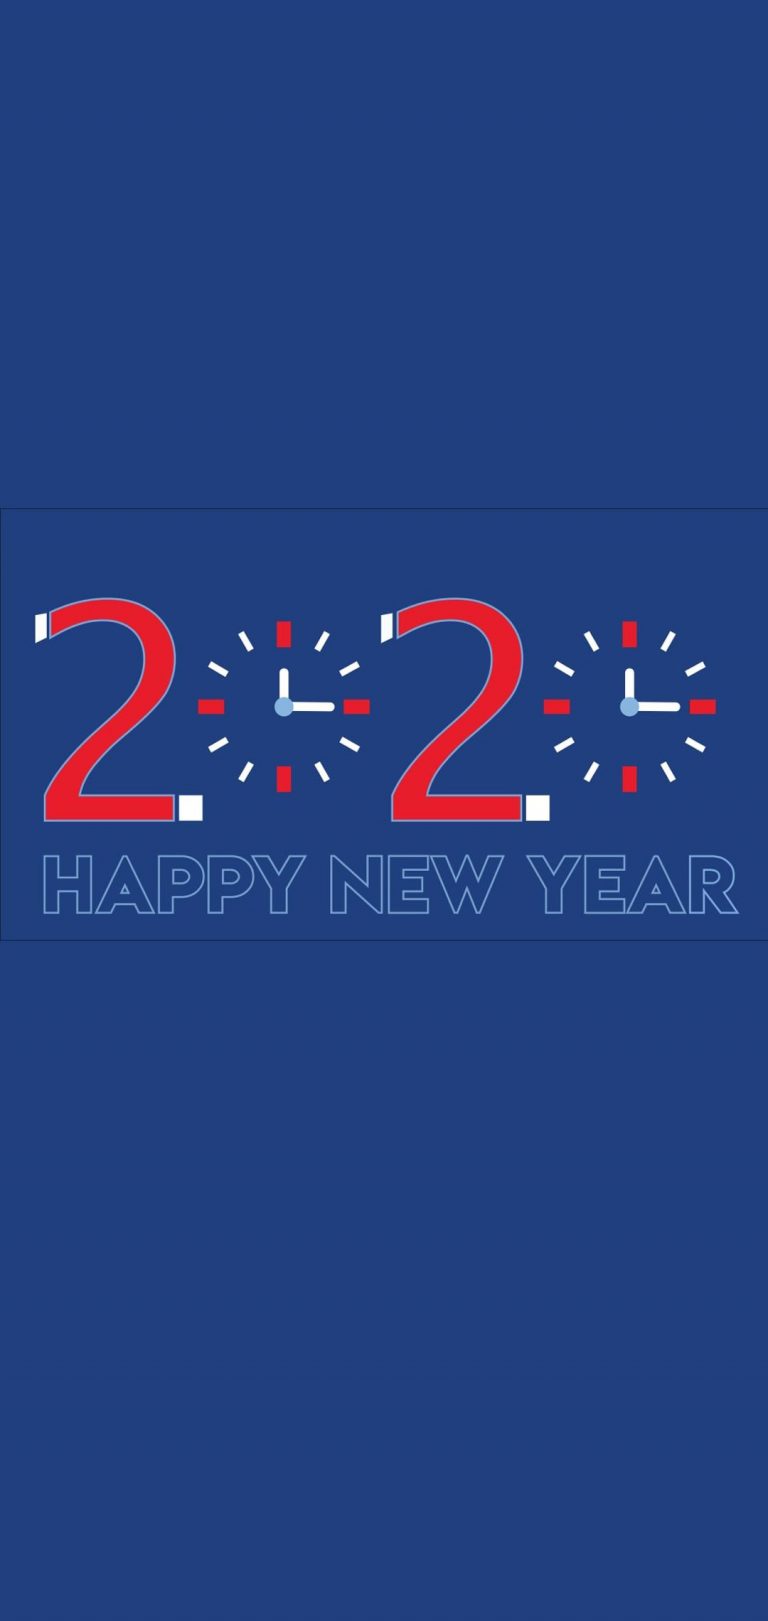 Happy New Year 2020 Phone Wallpaper 12 - [1080x2280]